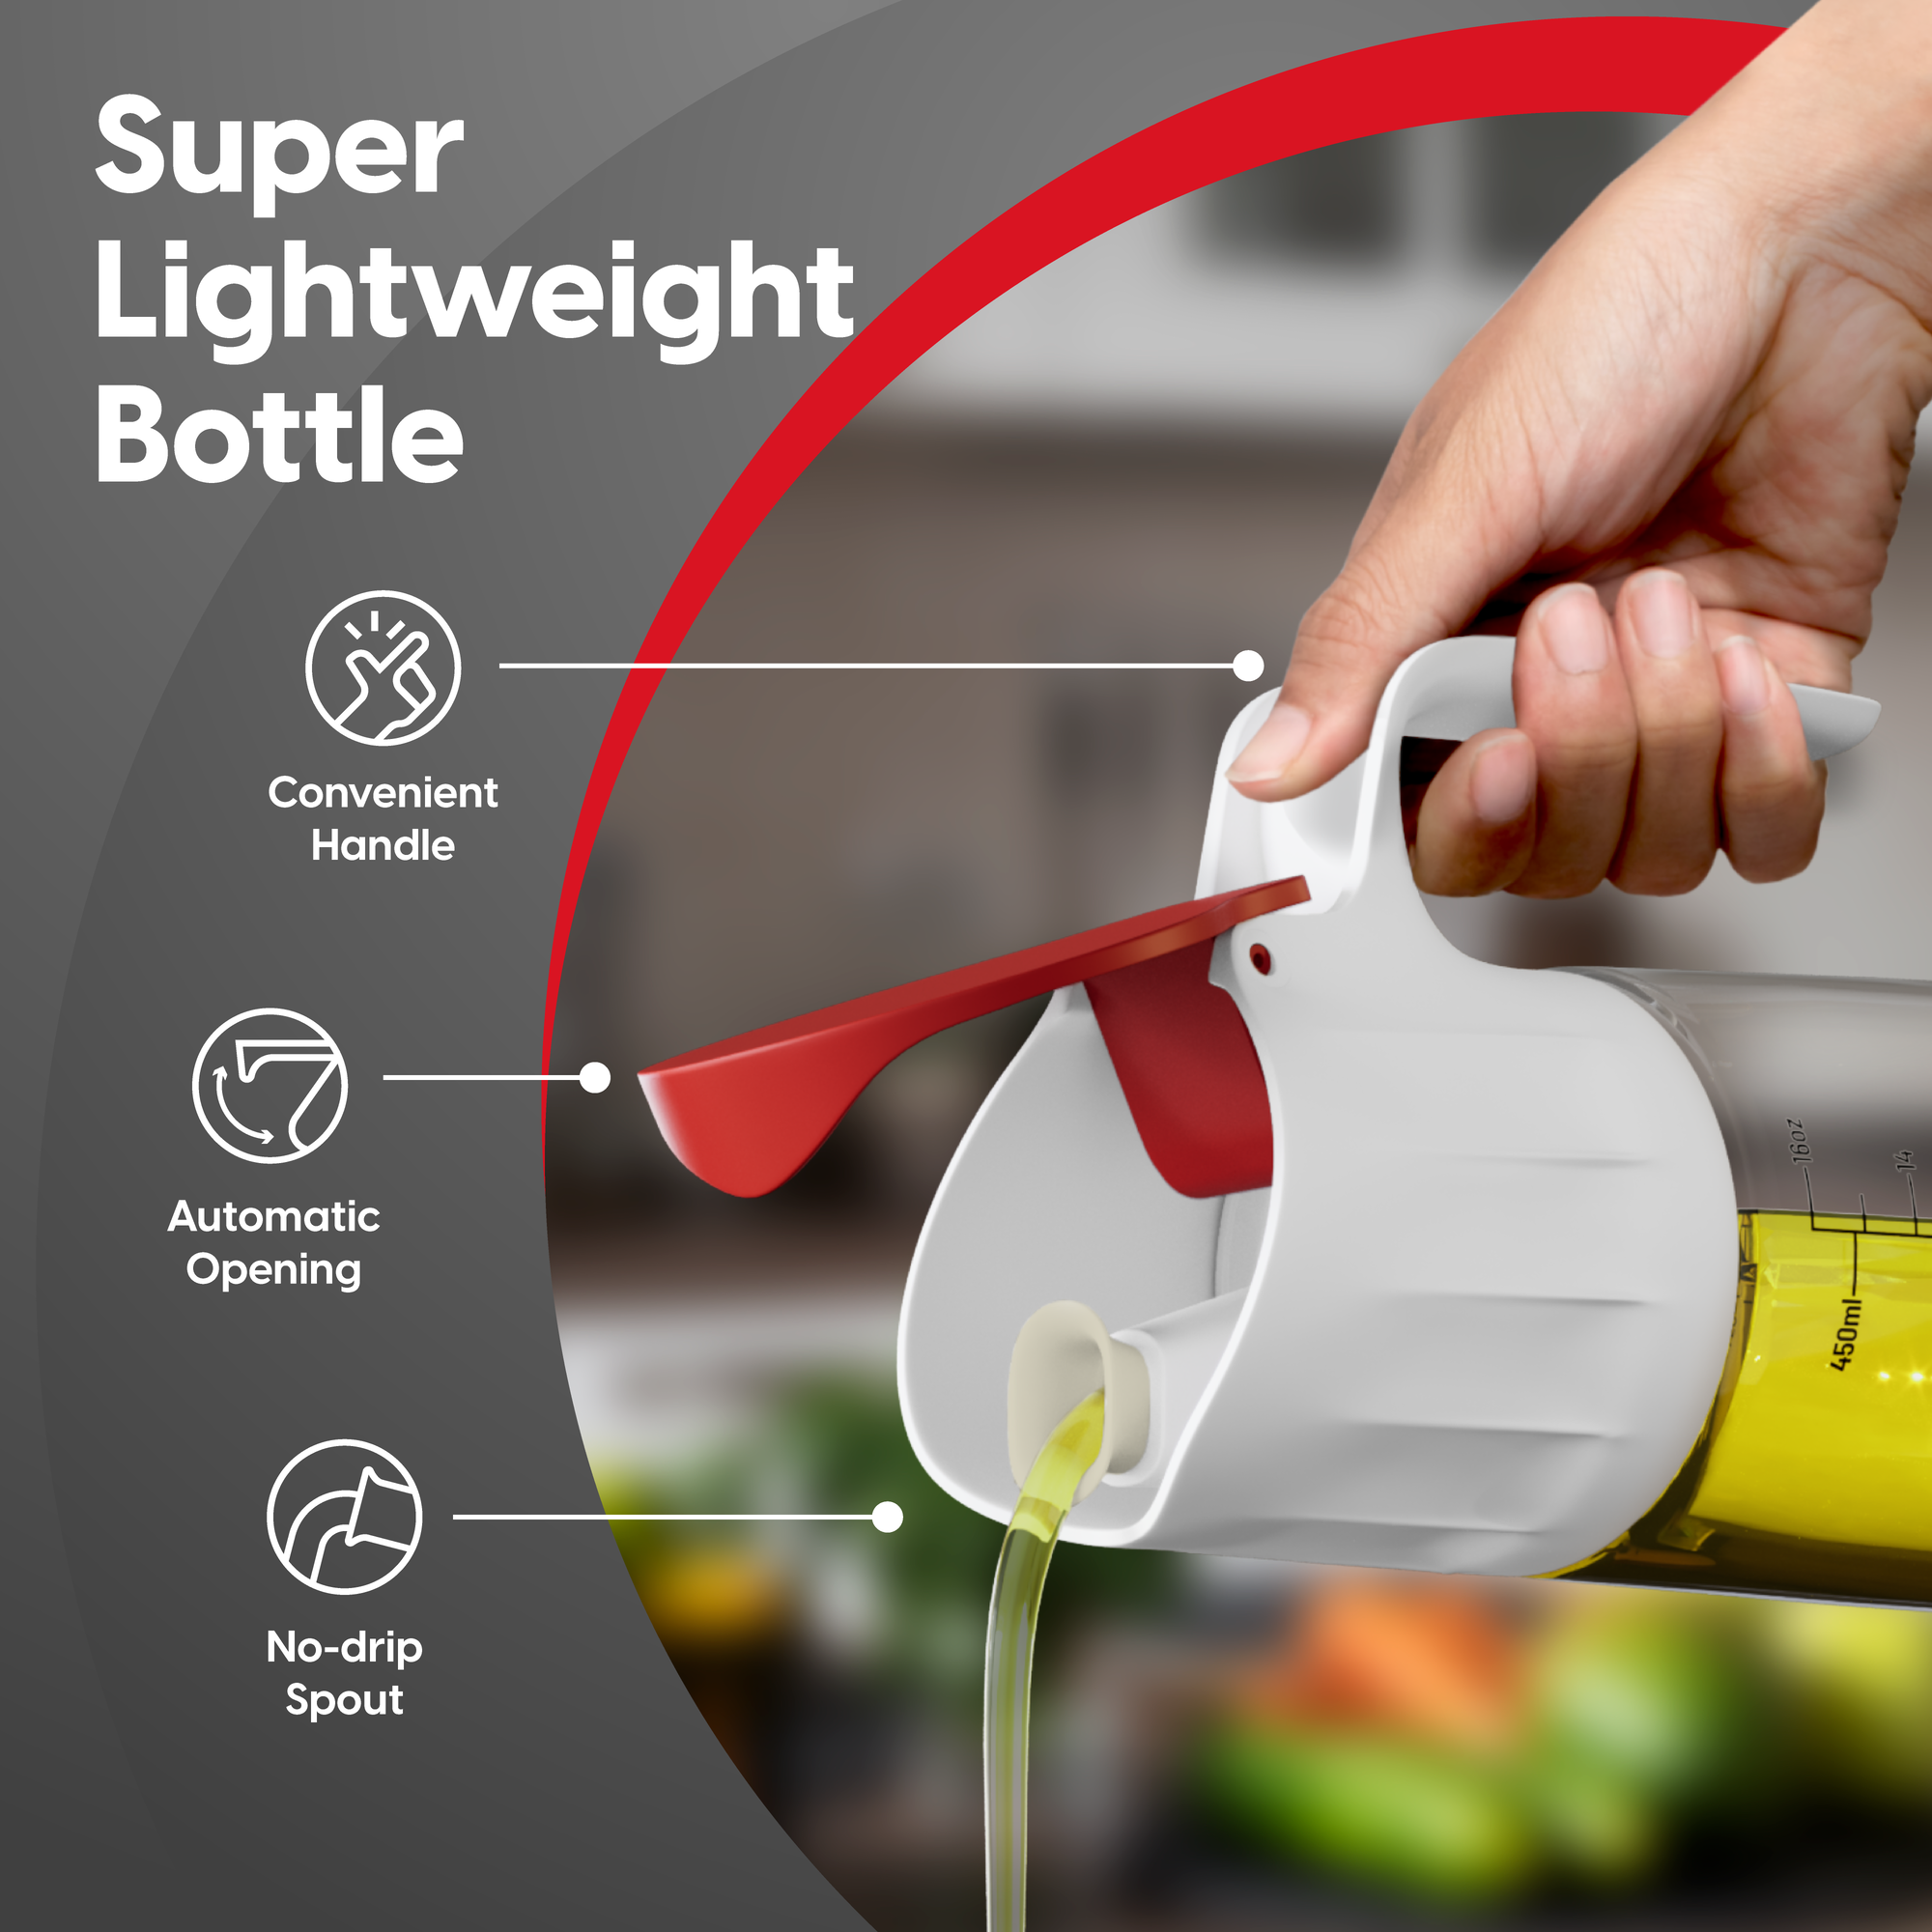 Olive Oil and Vinegar Dispenser Bottle Set - 2 Piece - Superior Glass –  Dwellza